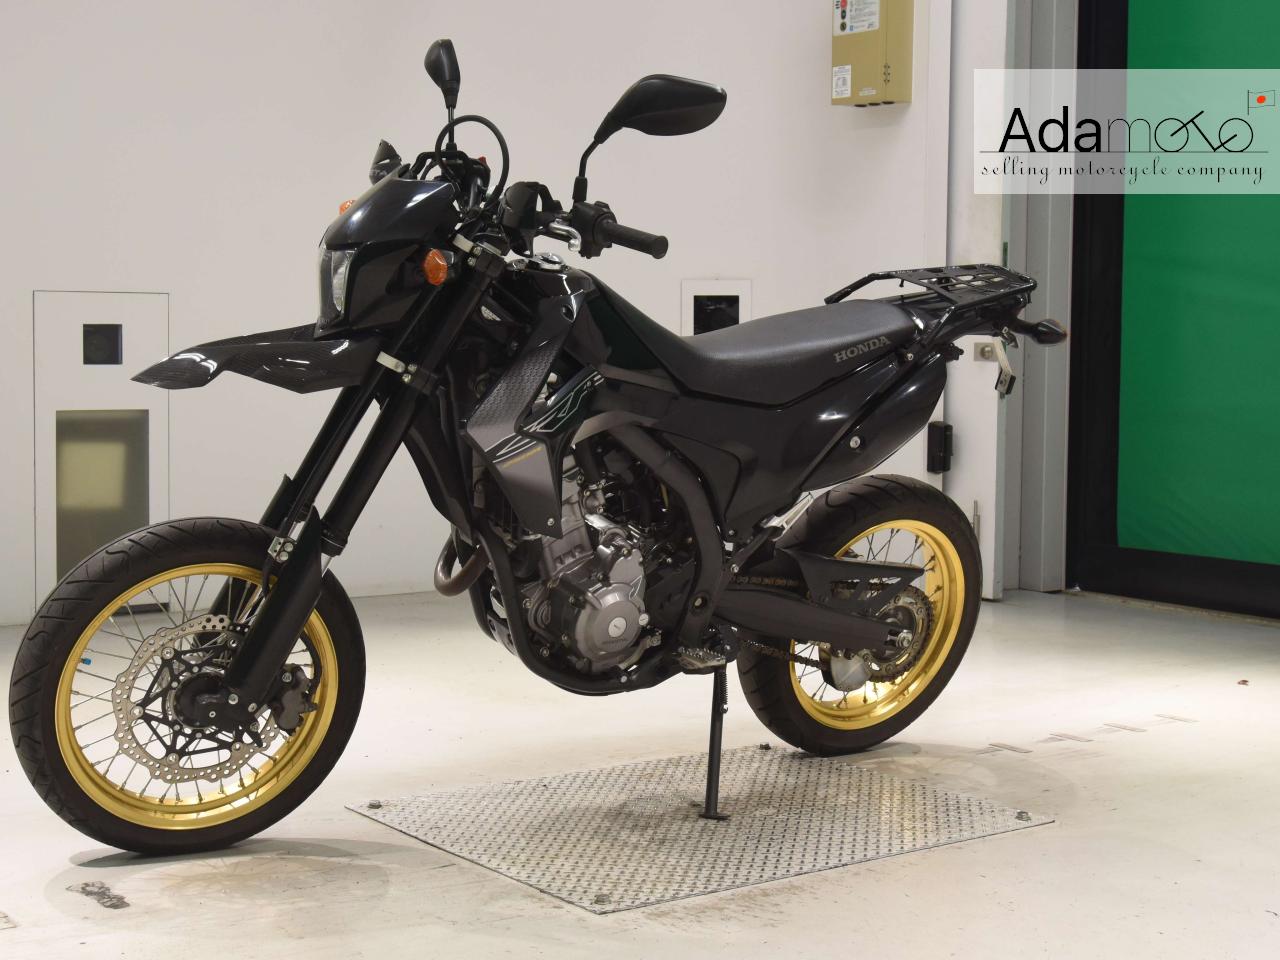 Honda CRF250M - Adamoto - Motorcycles from Japan